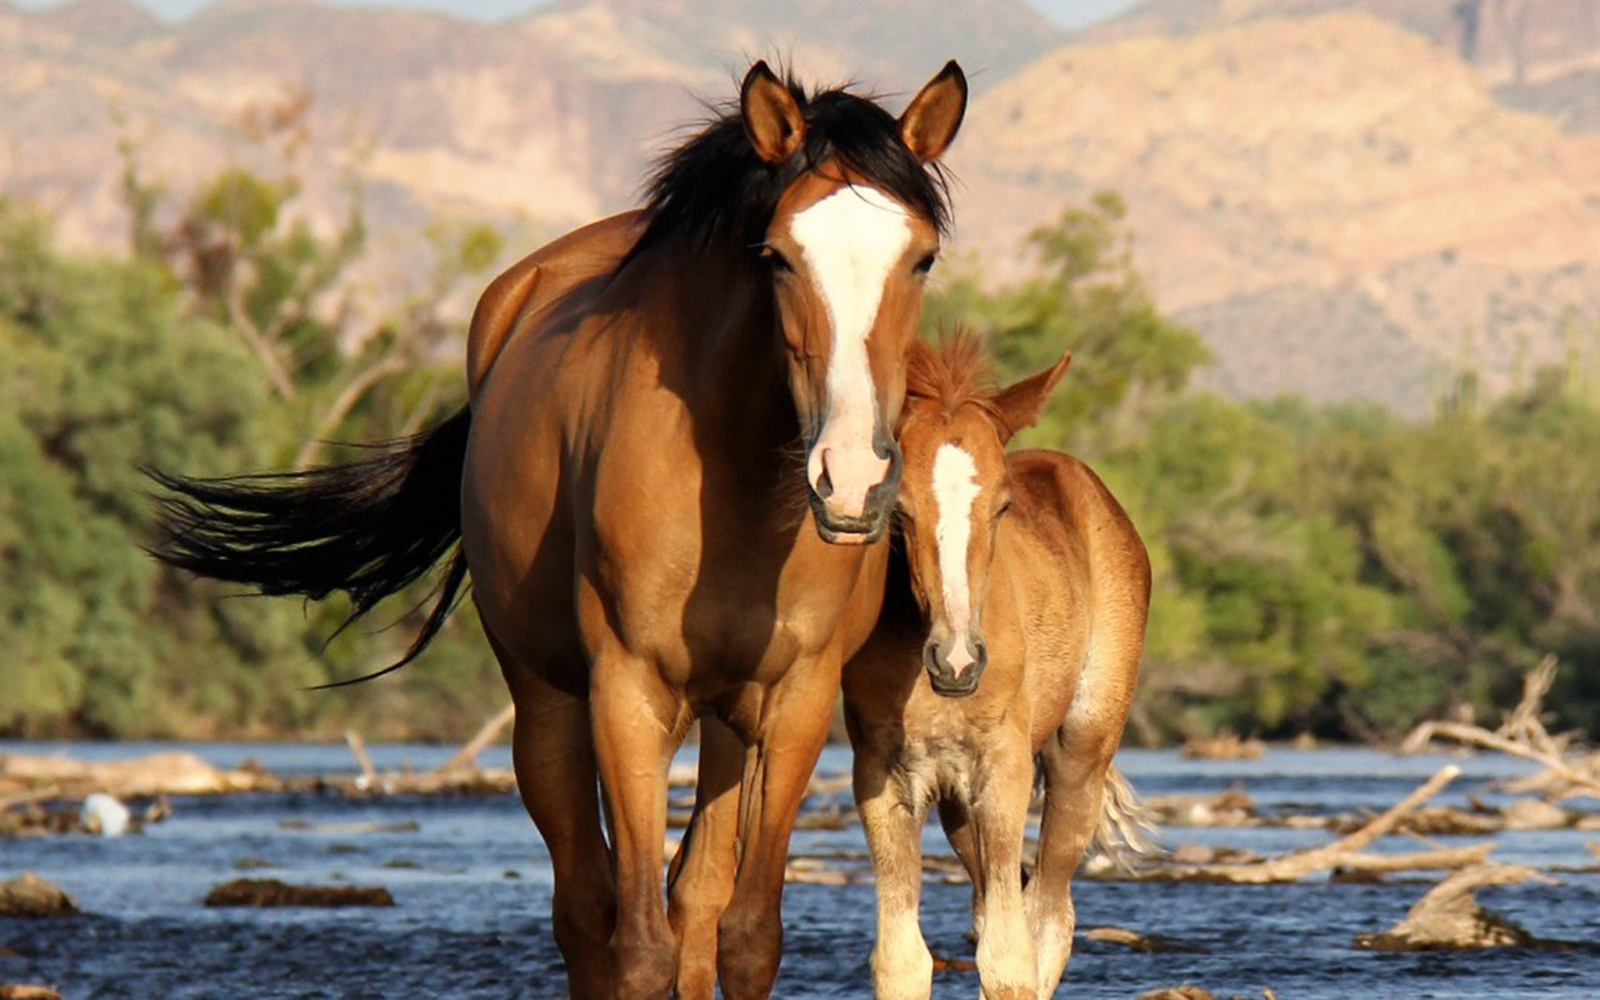 Salt River Wild Horse nonprofit gains in fertility program, loses donations